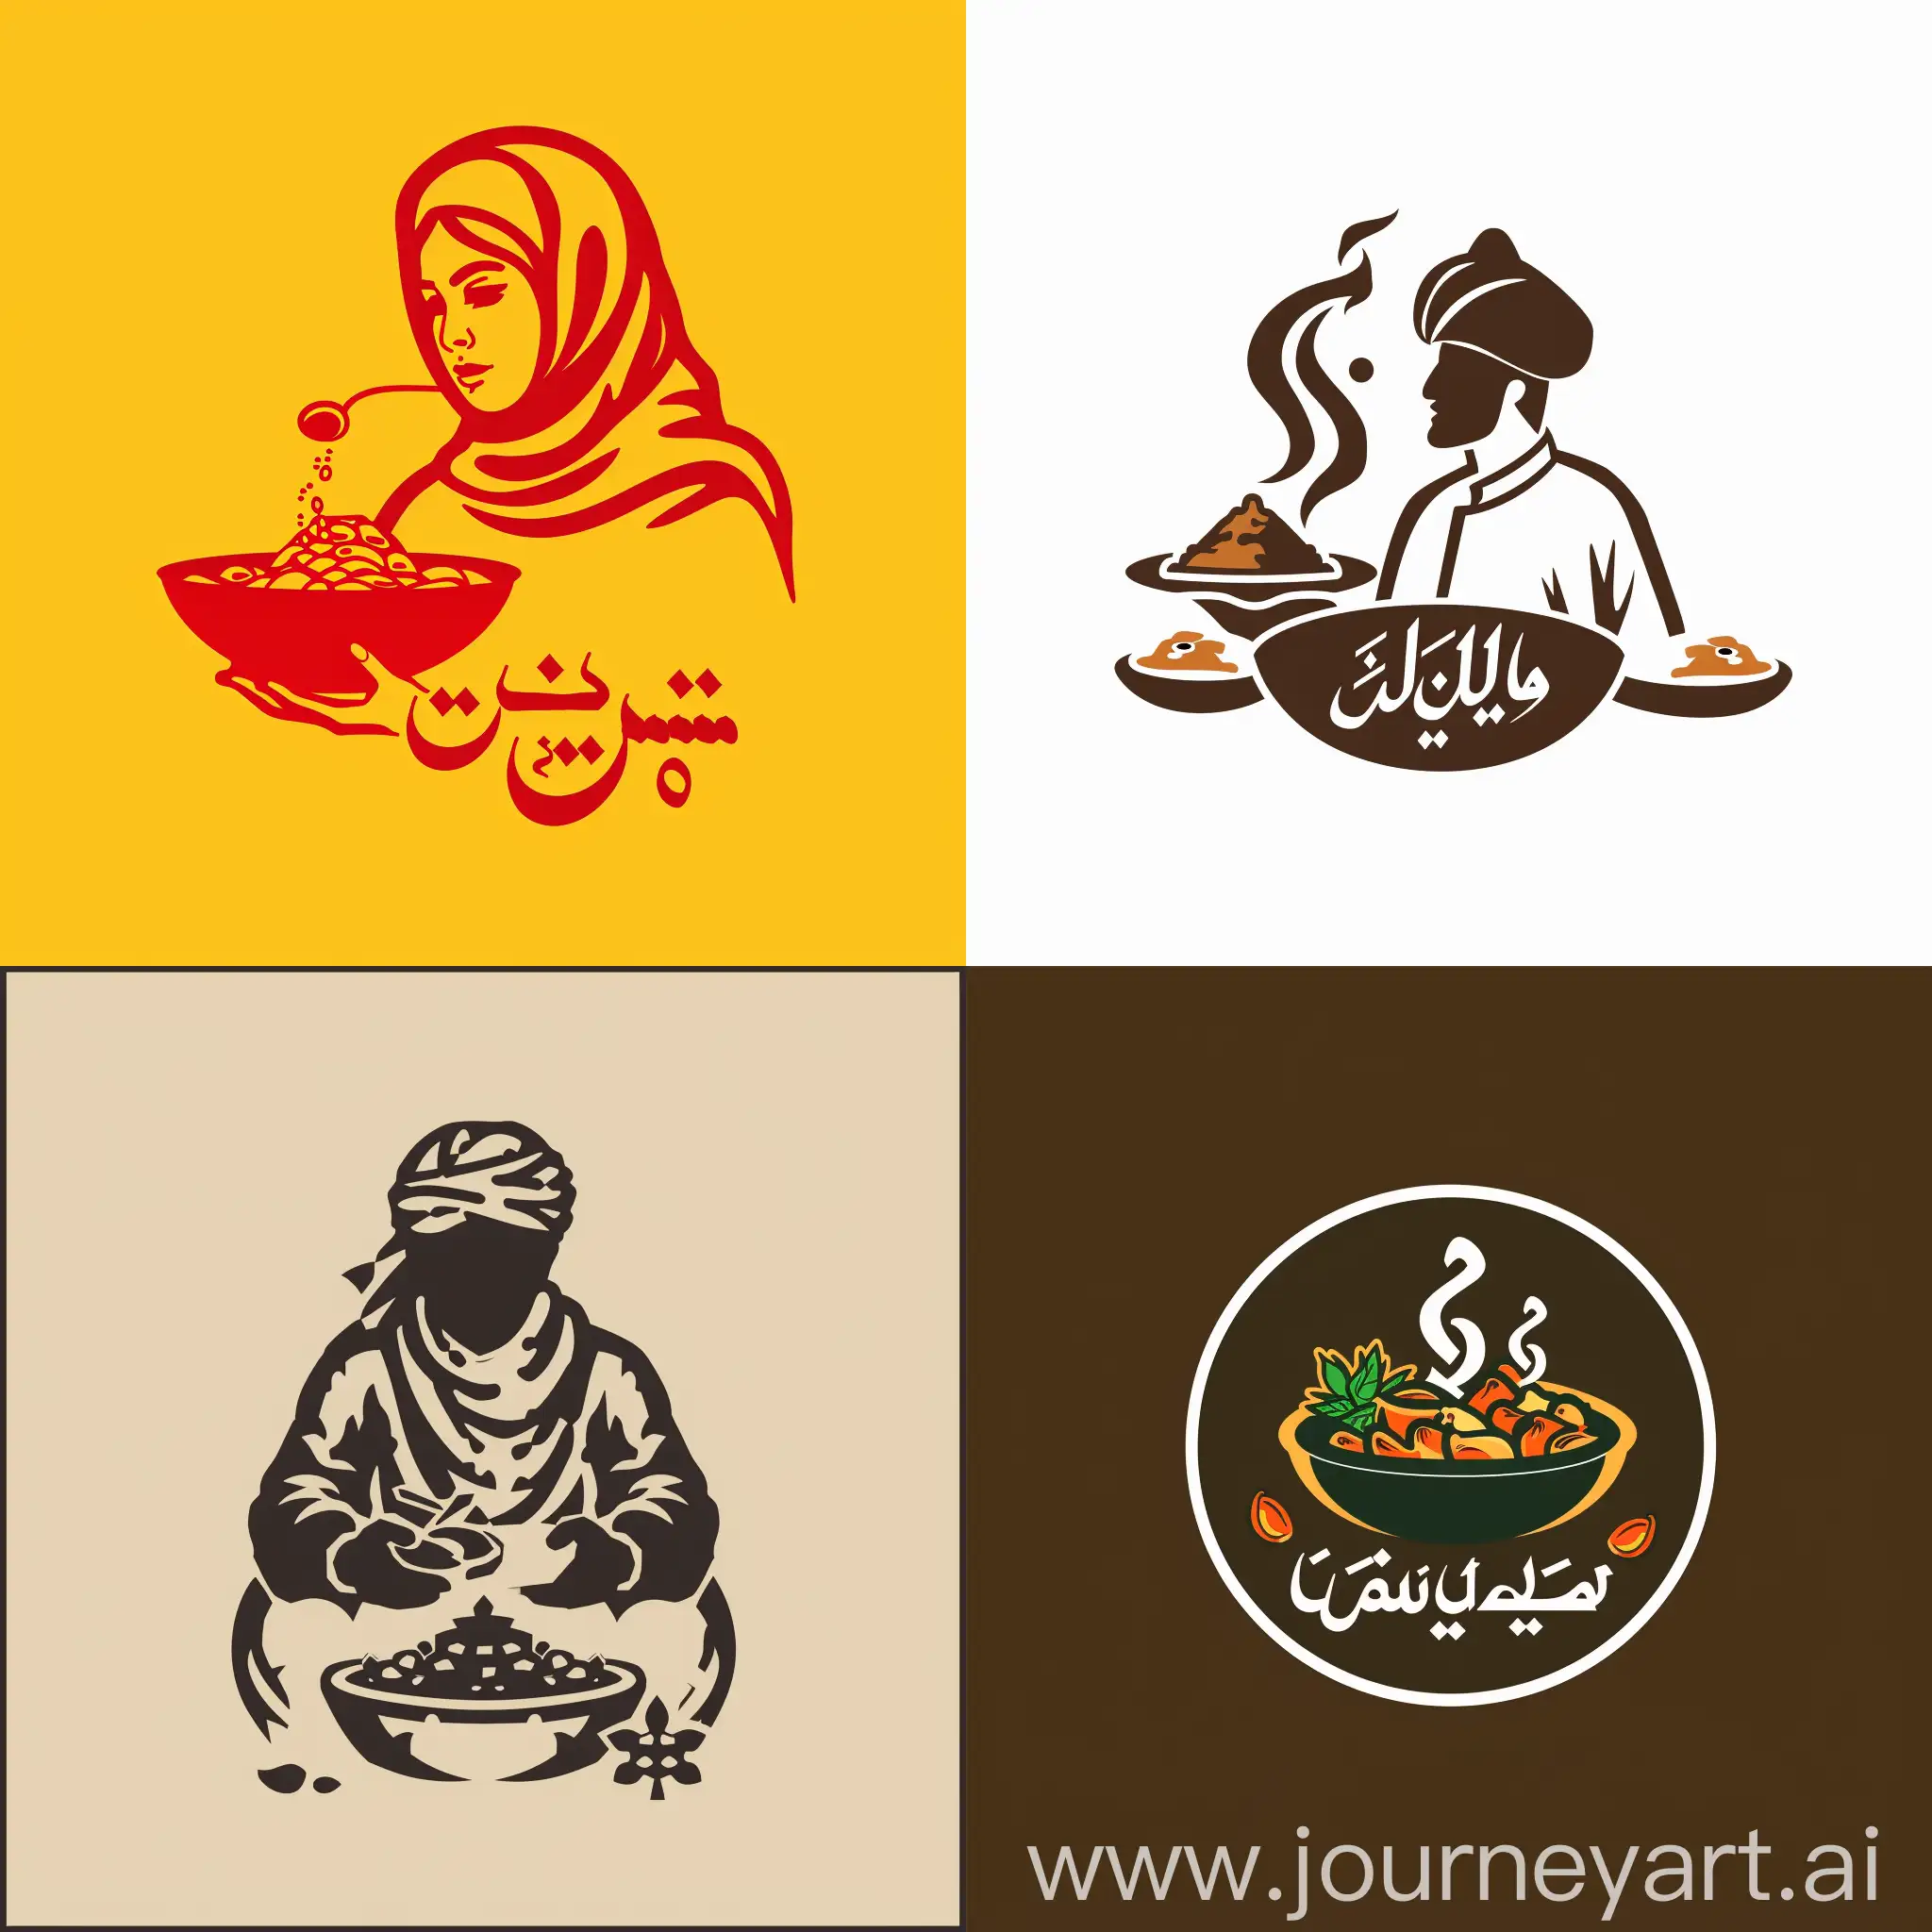 Traditional-Yemeni-Cuisine-Restaurant-Logo-with-Vibrant-Colors